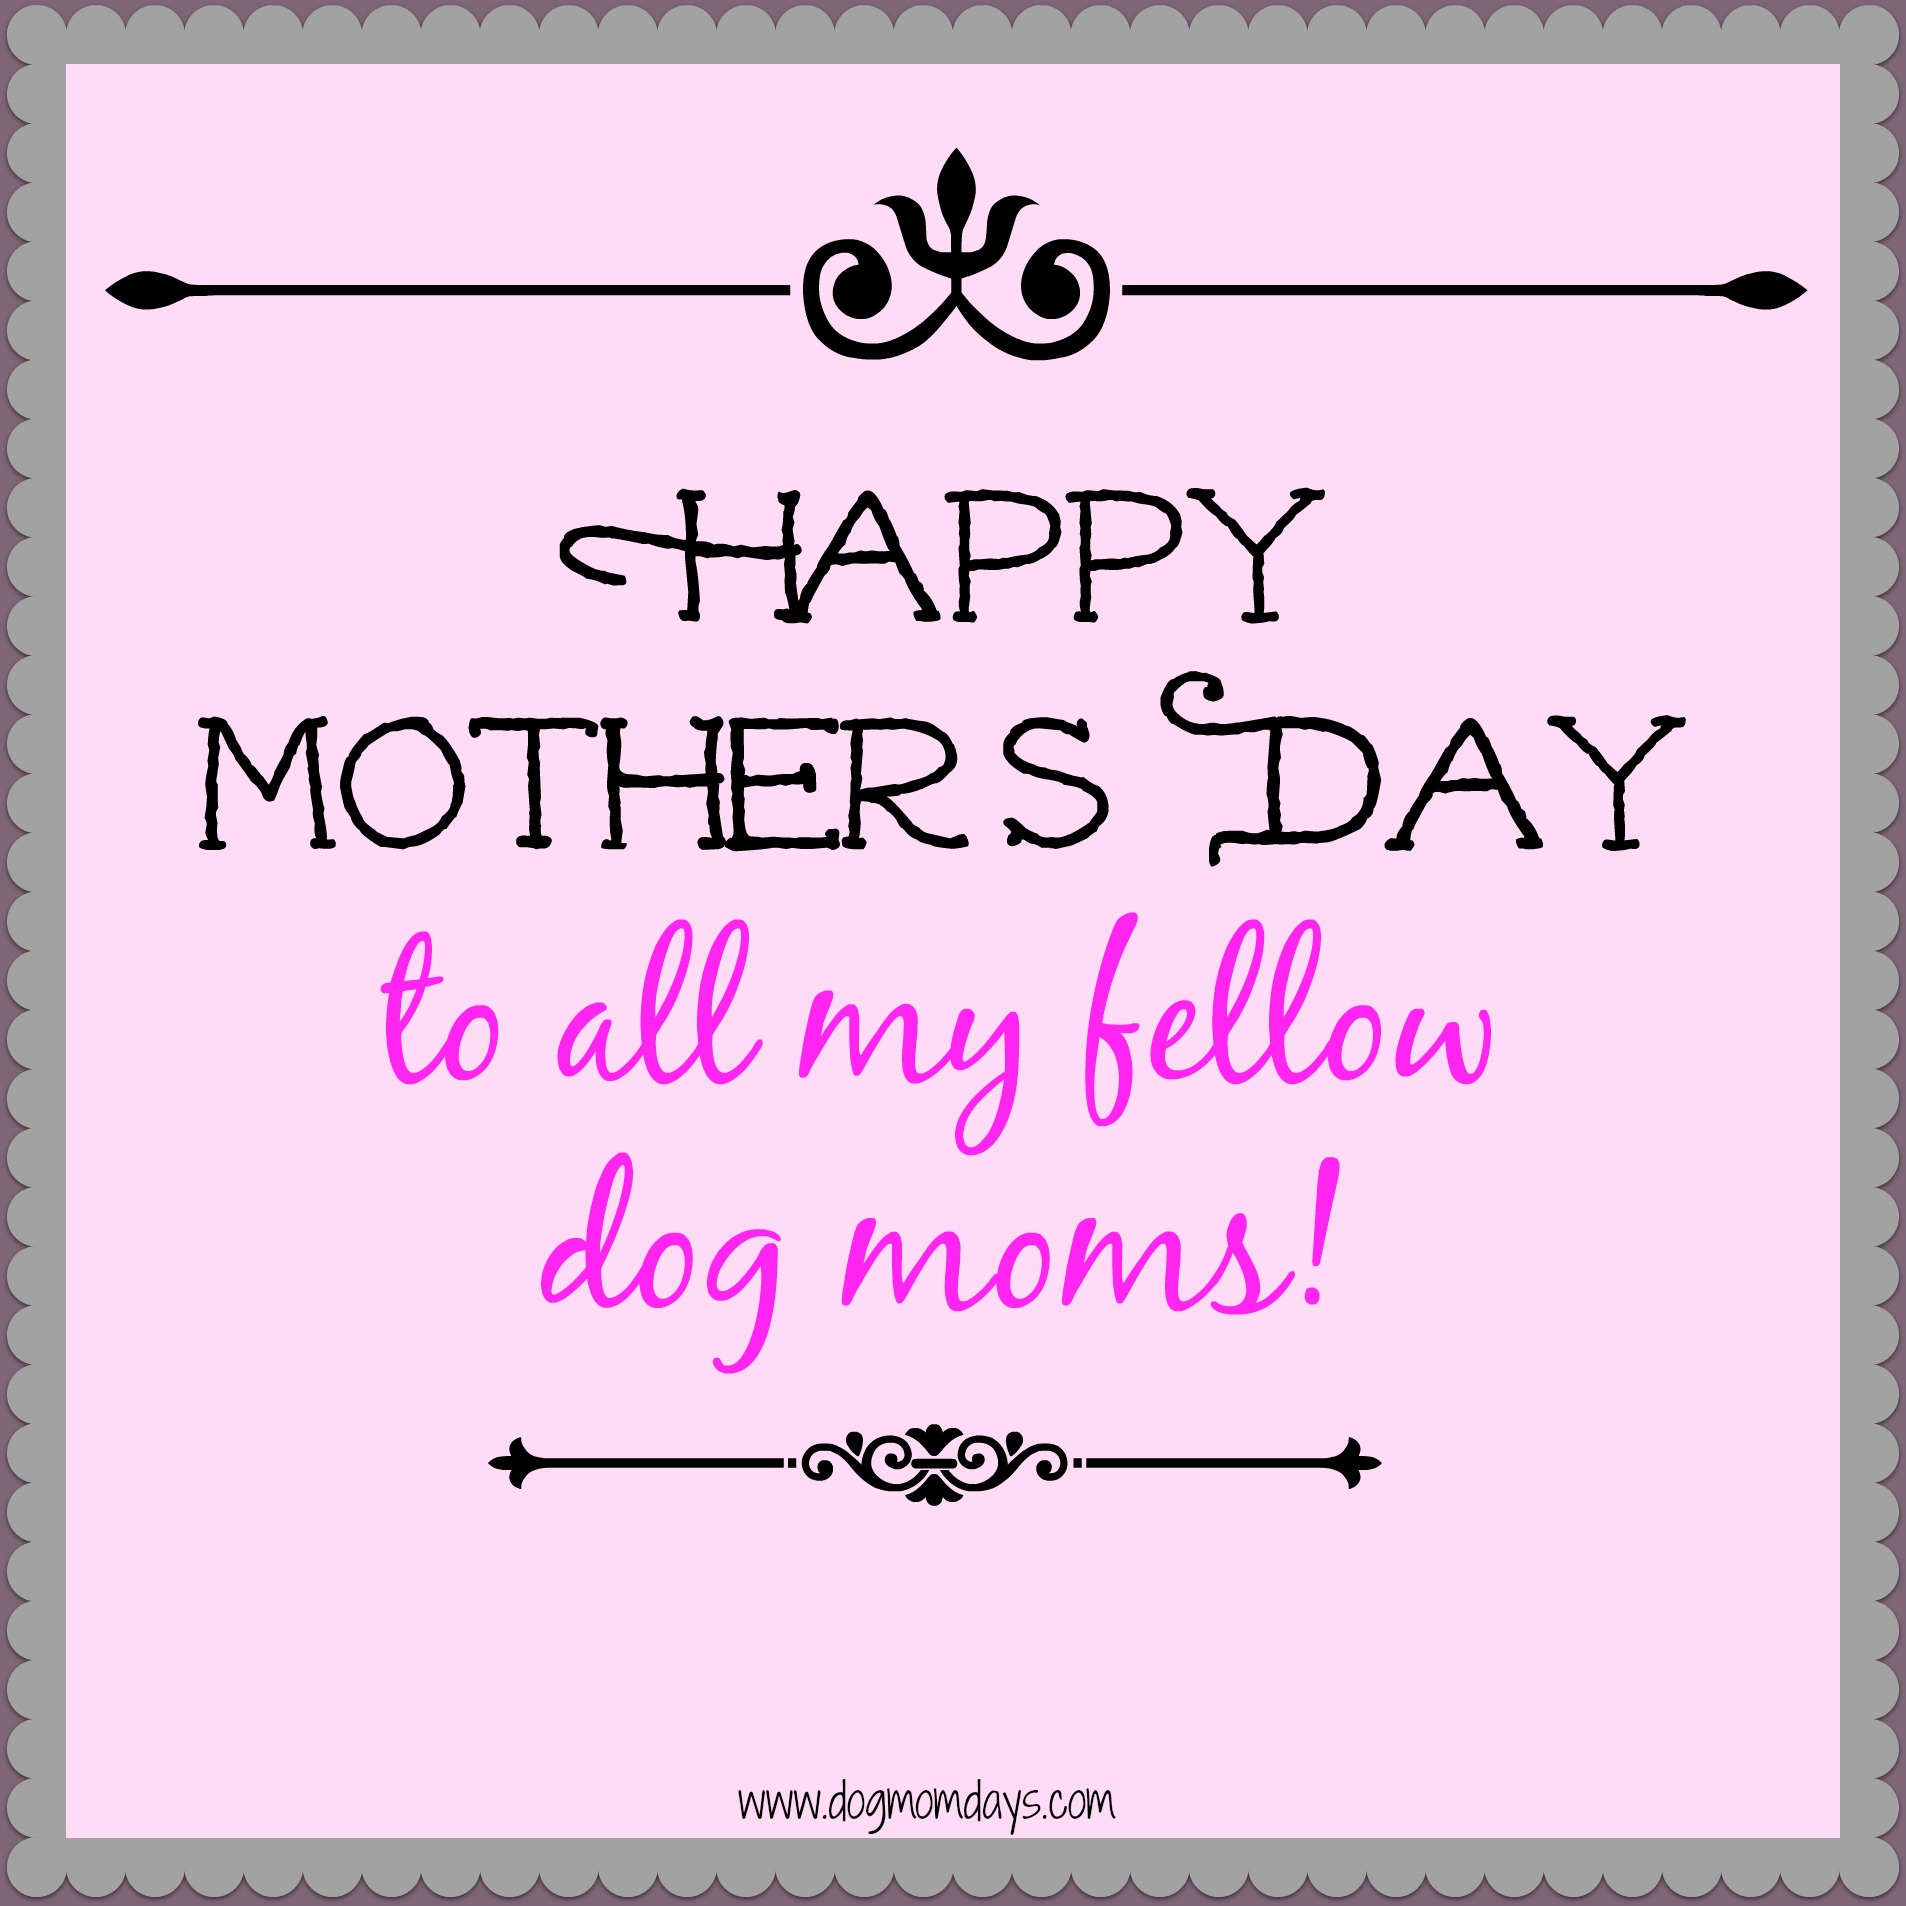 https://www.dogmomdays.com/wp-content/uploads/2015/04/motherdays.jpg